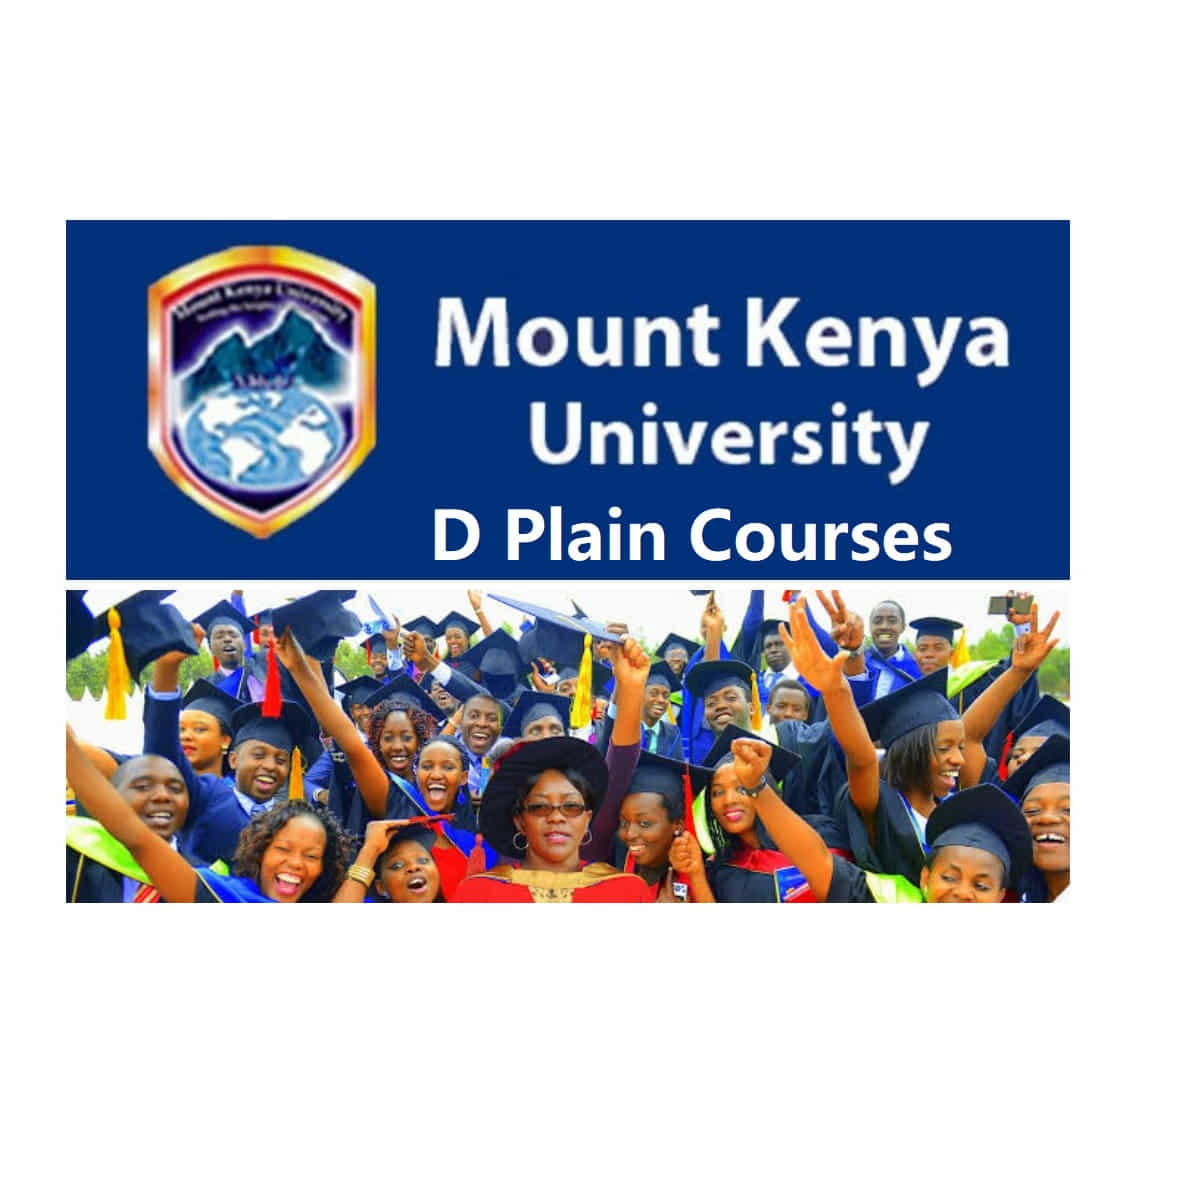 D plain courses in Mount Kenya University.